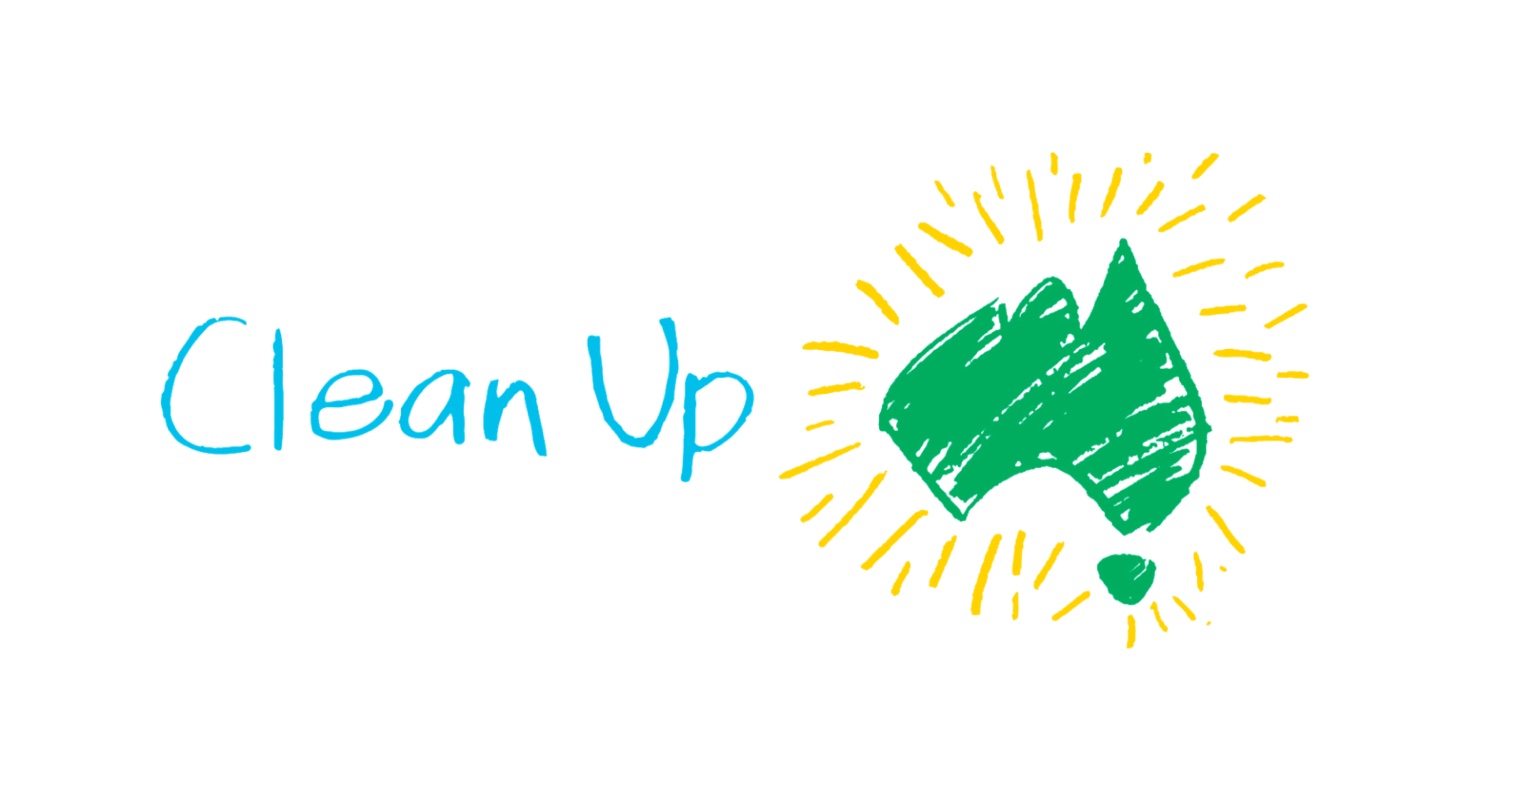 Clean up Australia